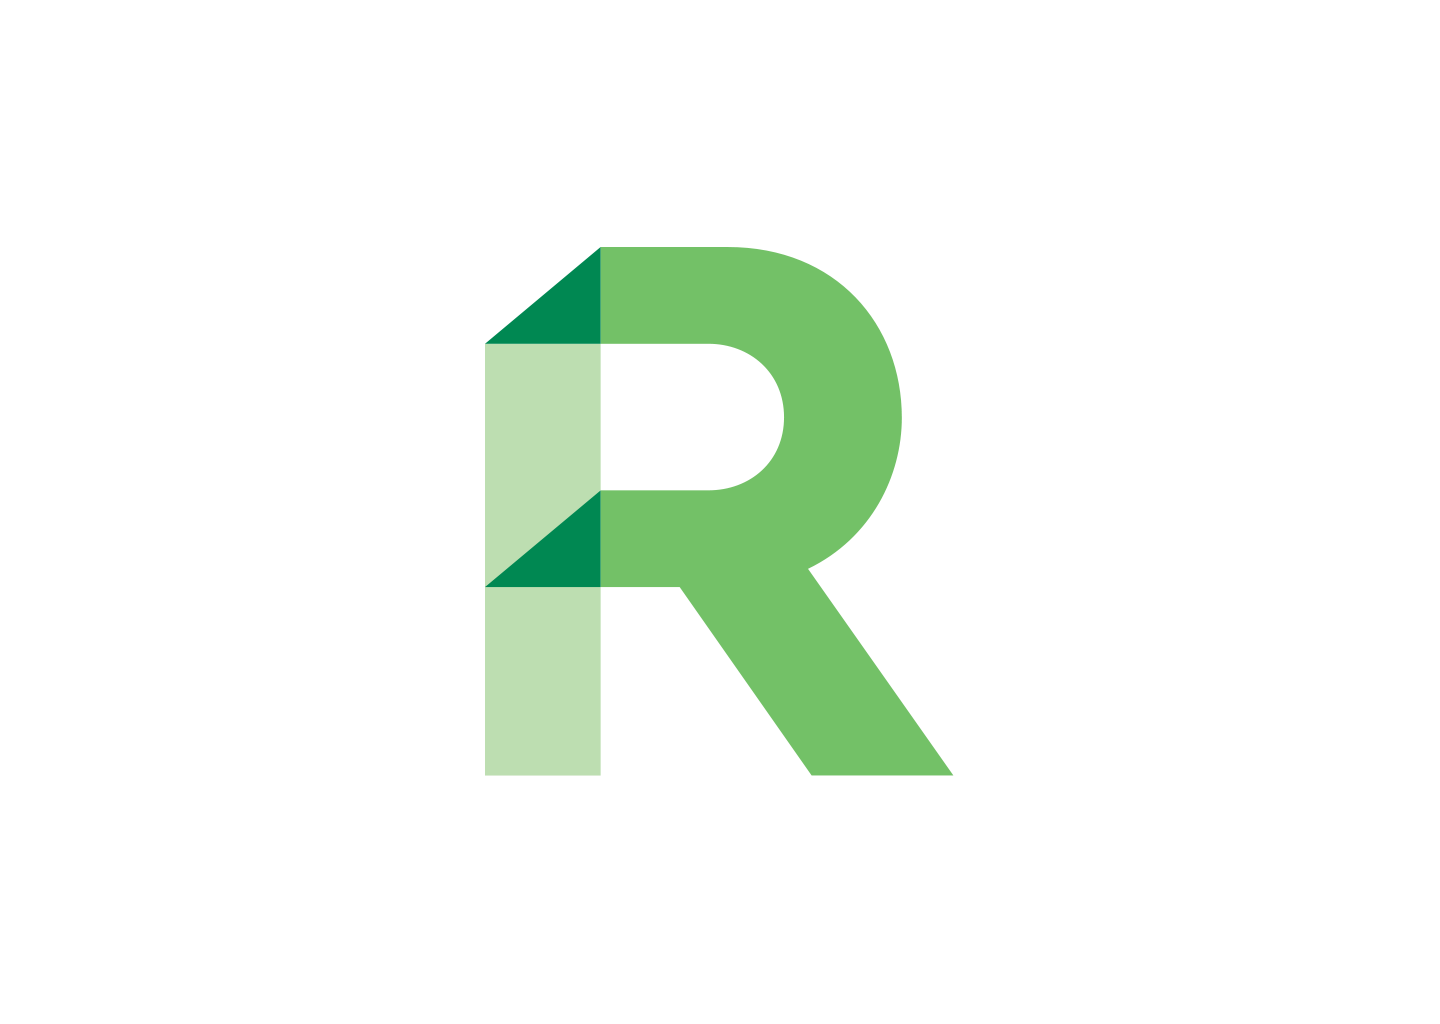 r logo | Logospike.com: Famous and Free Vector Logos